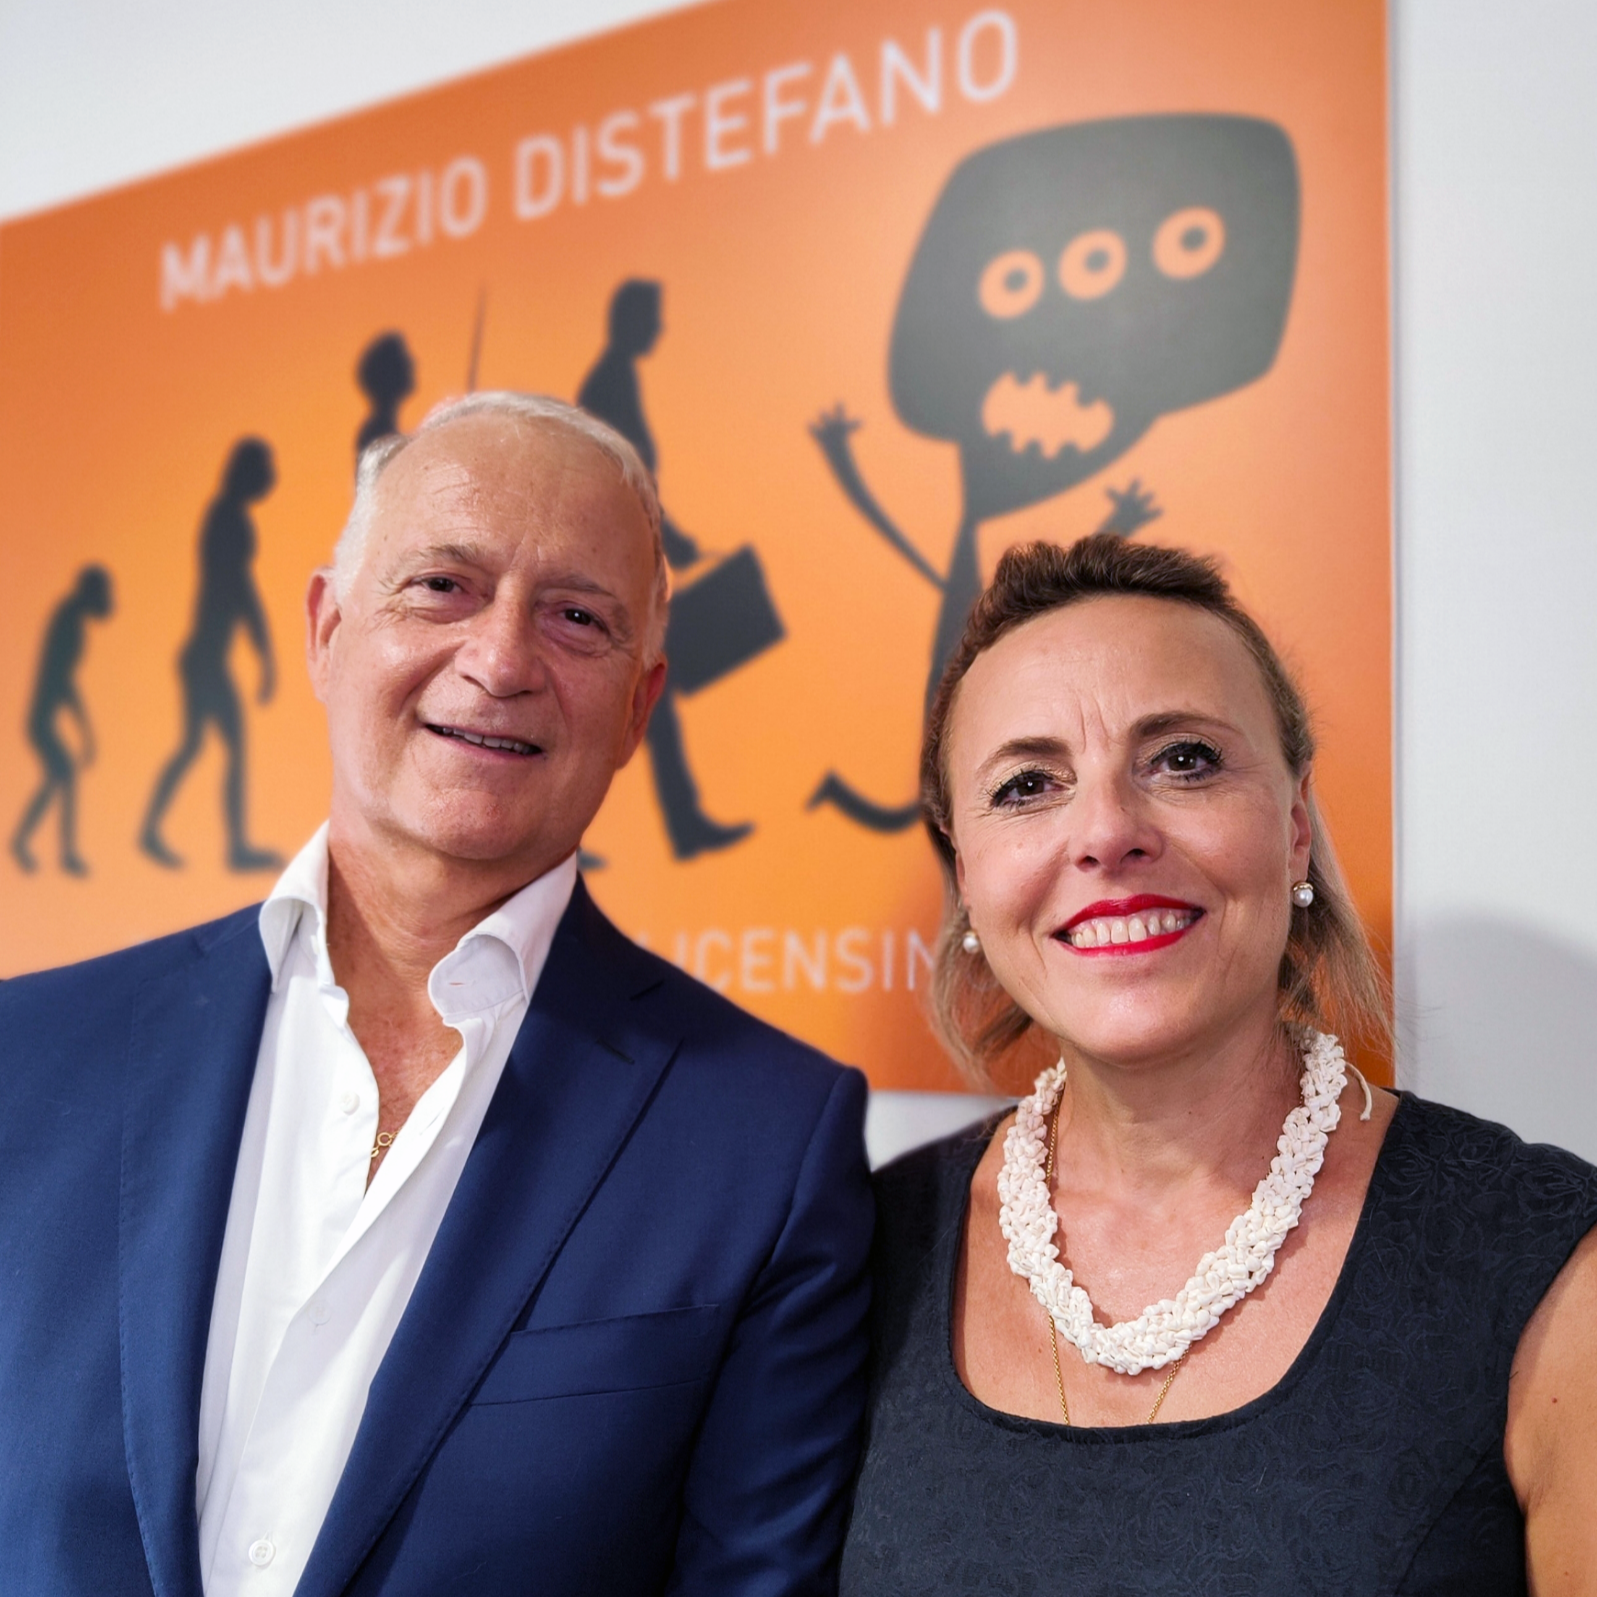 Maurizio Distefano Licensing celebrates a decade of success!